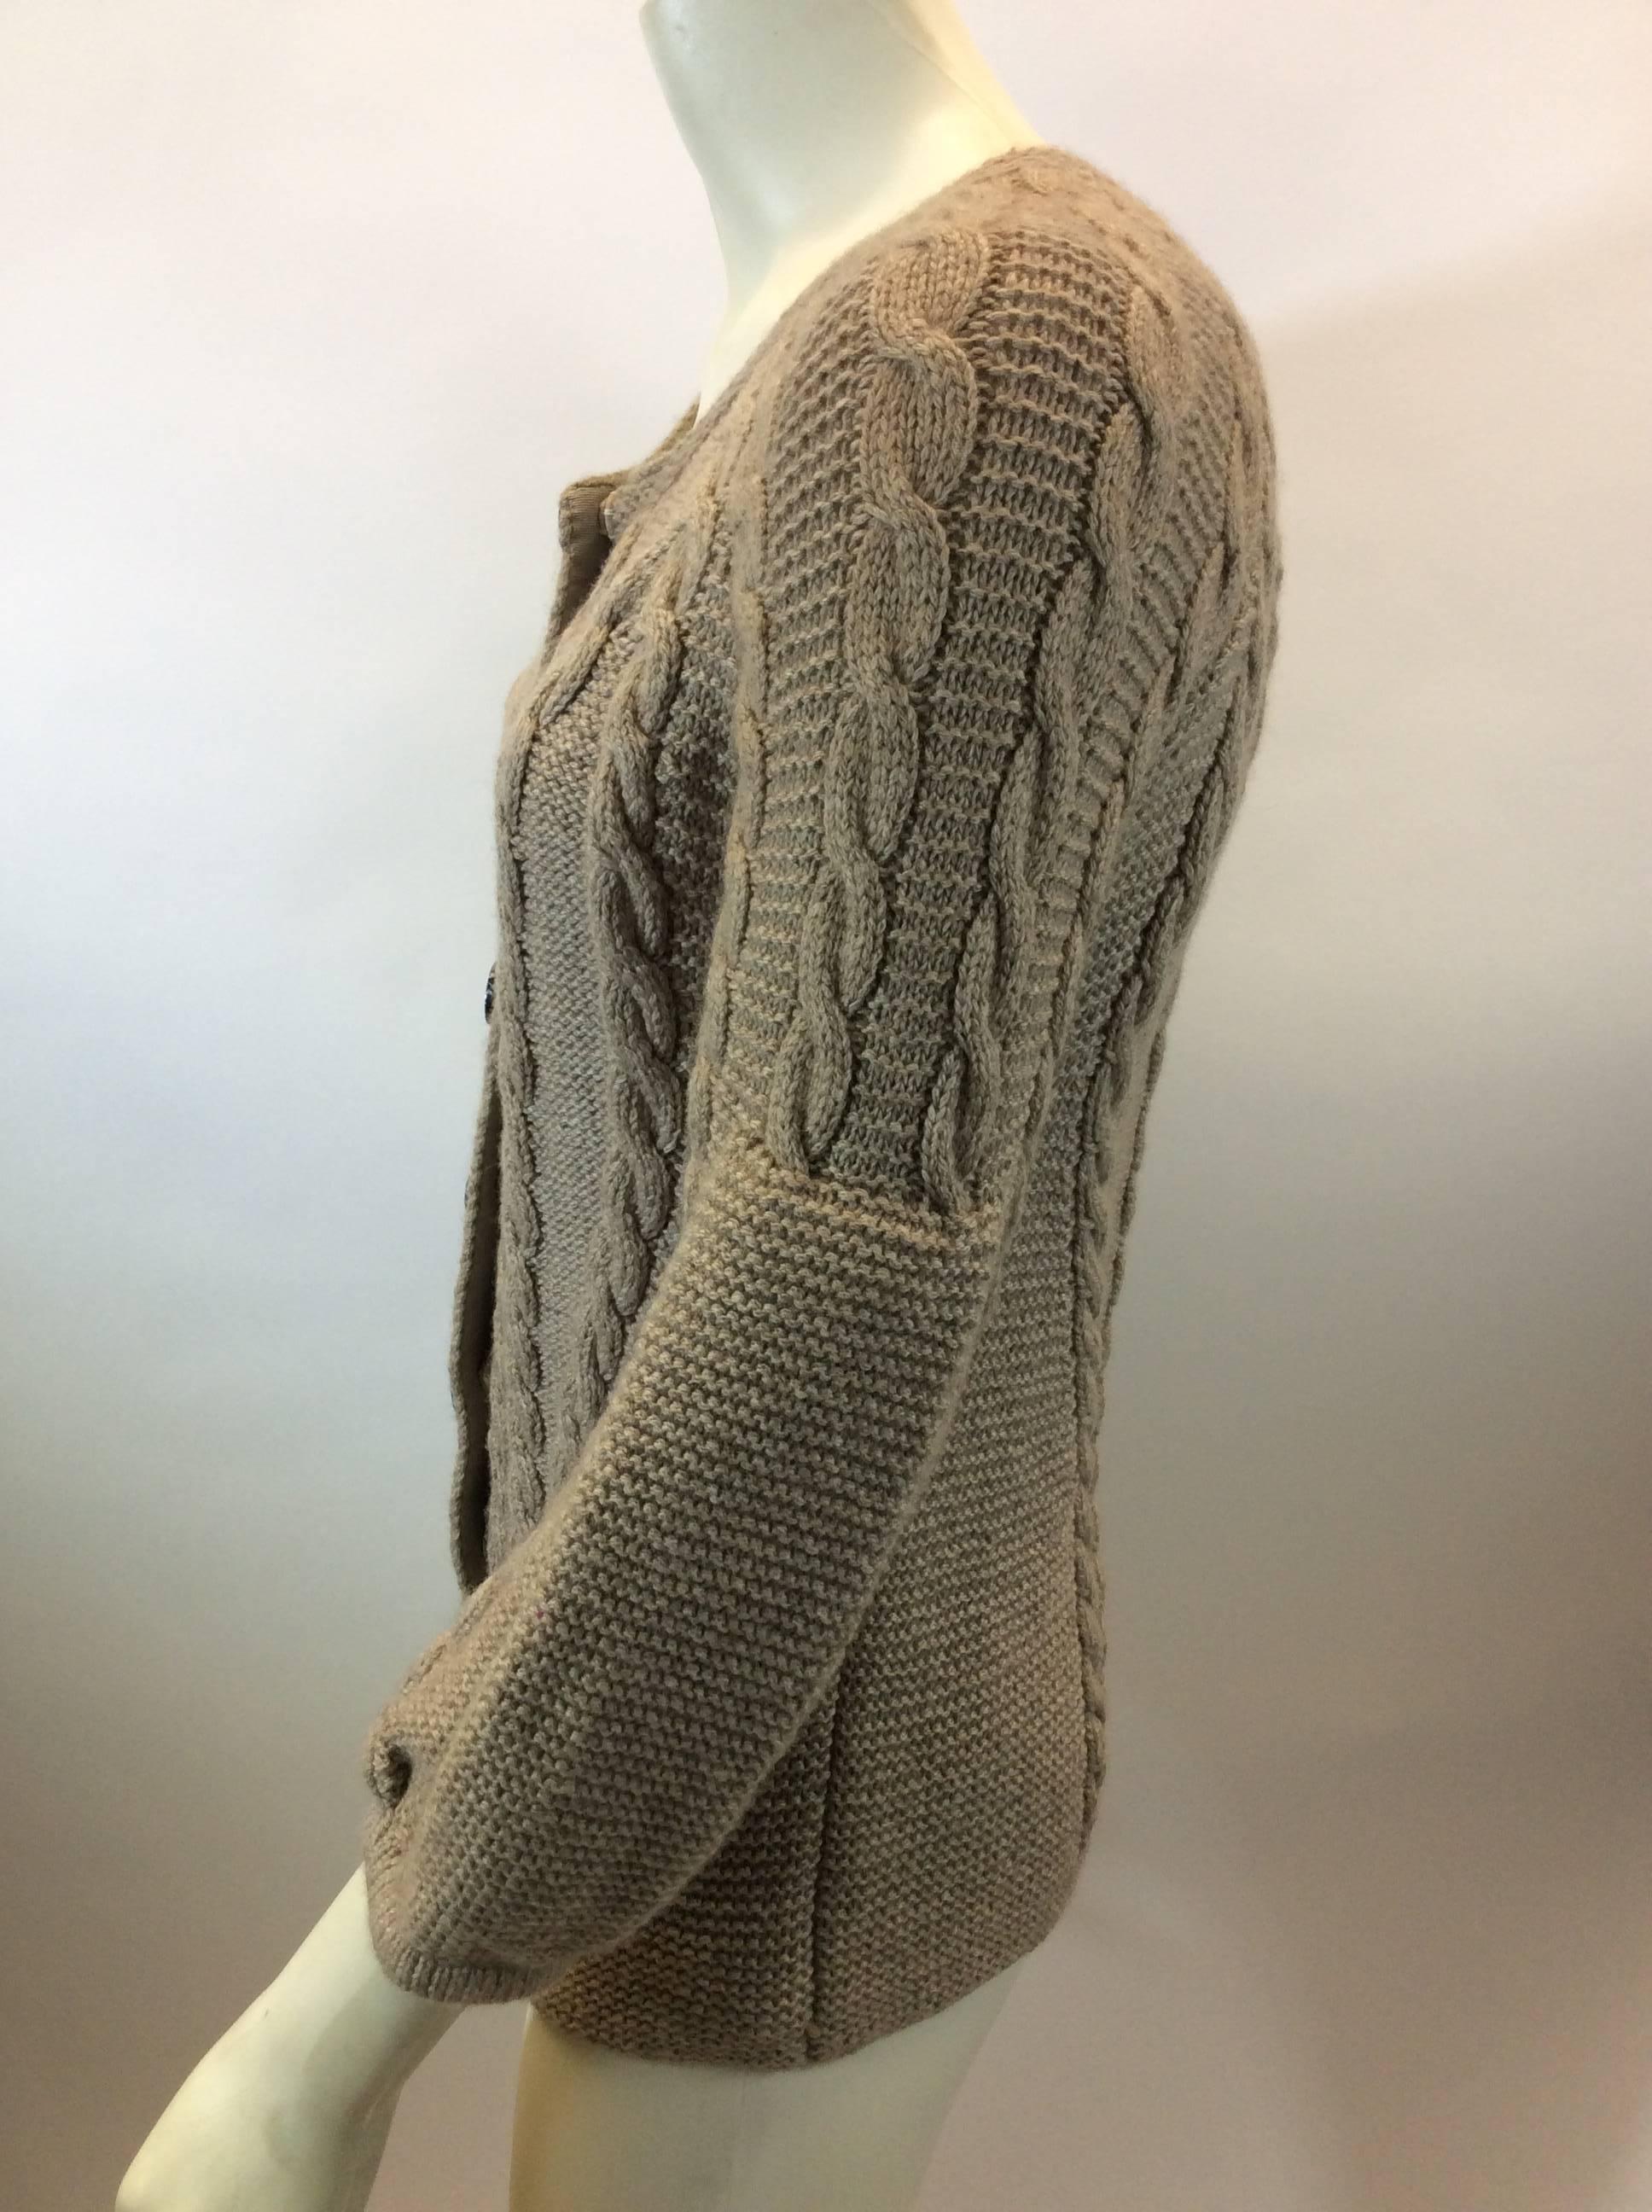 Oscar De La Renta Tan Knit Cardigan
Made in Russia
$250
100% Cashmere
Size Small
Length 23